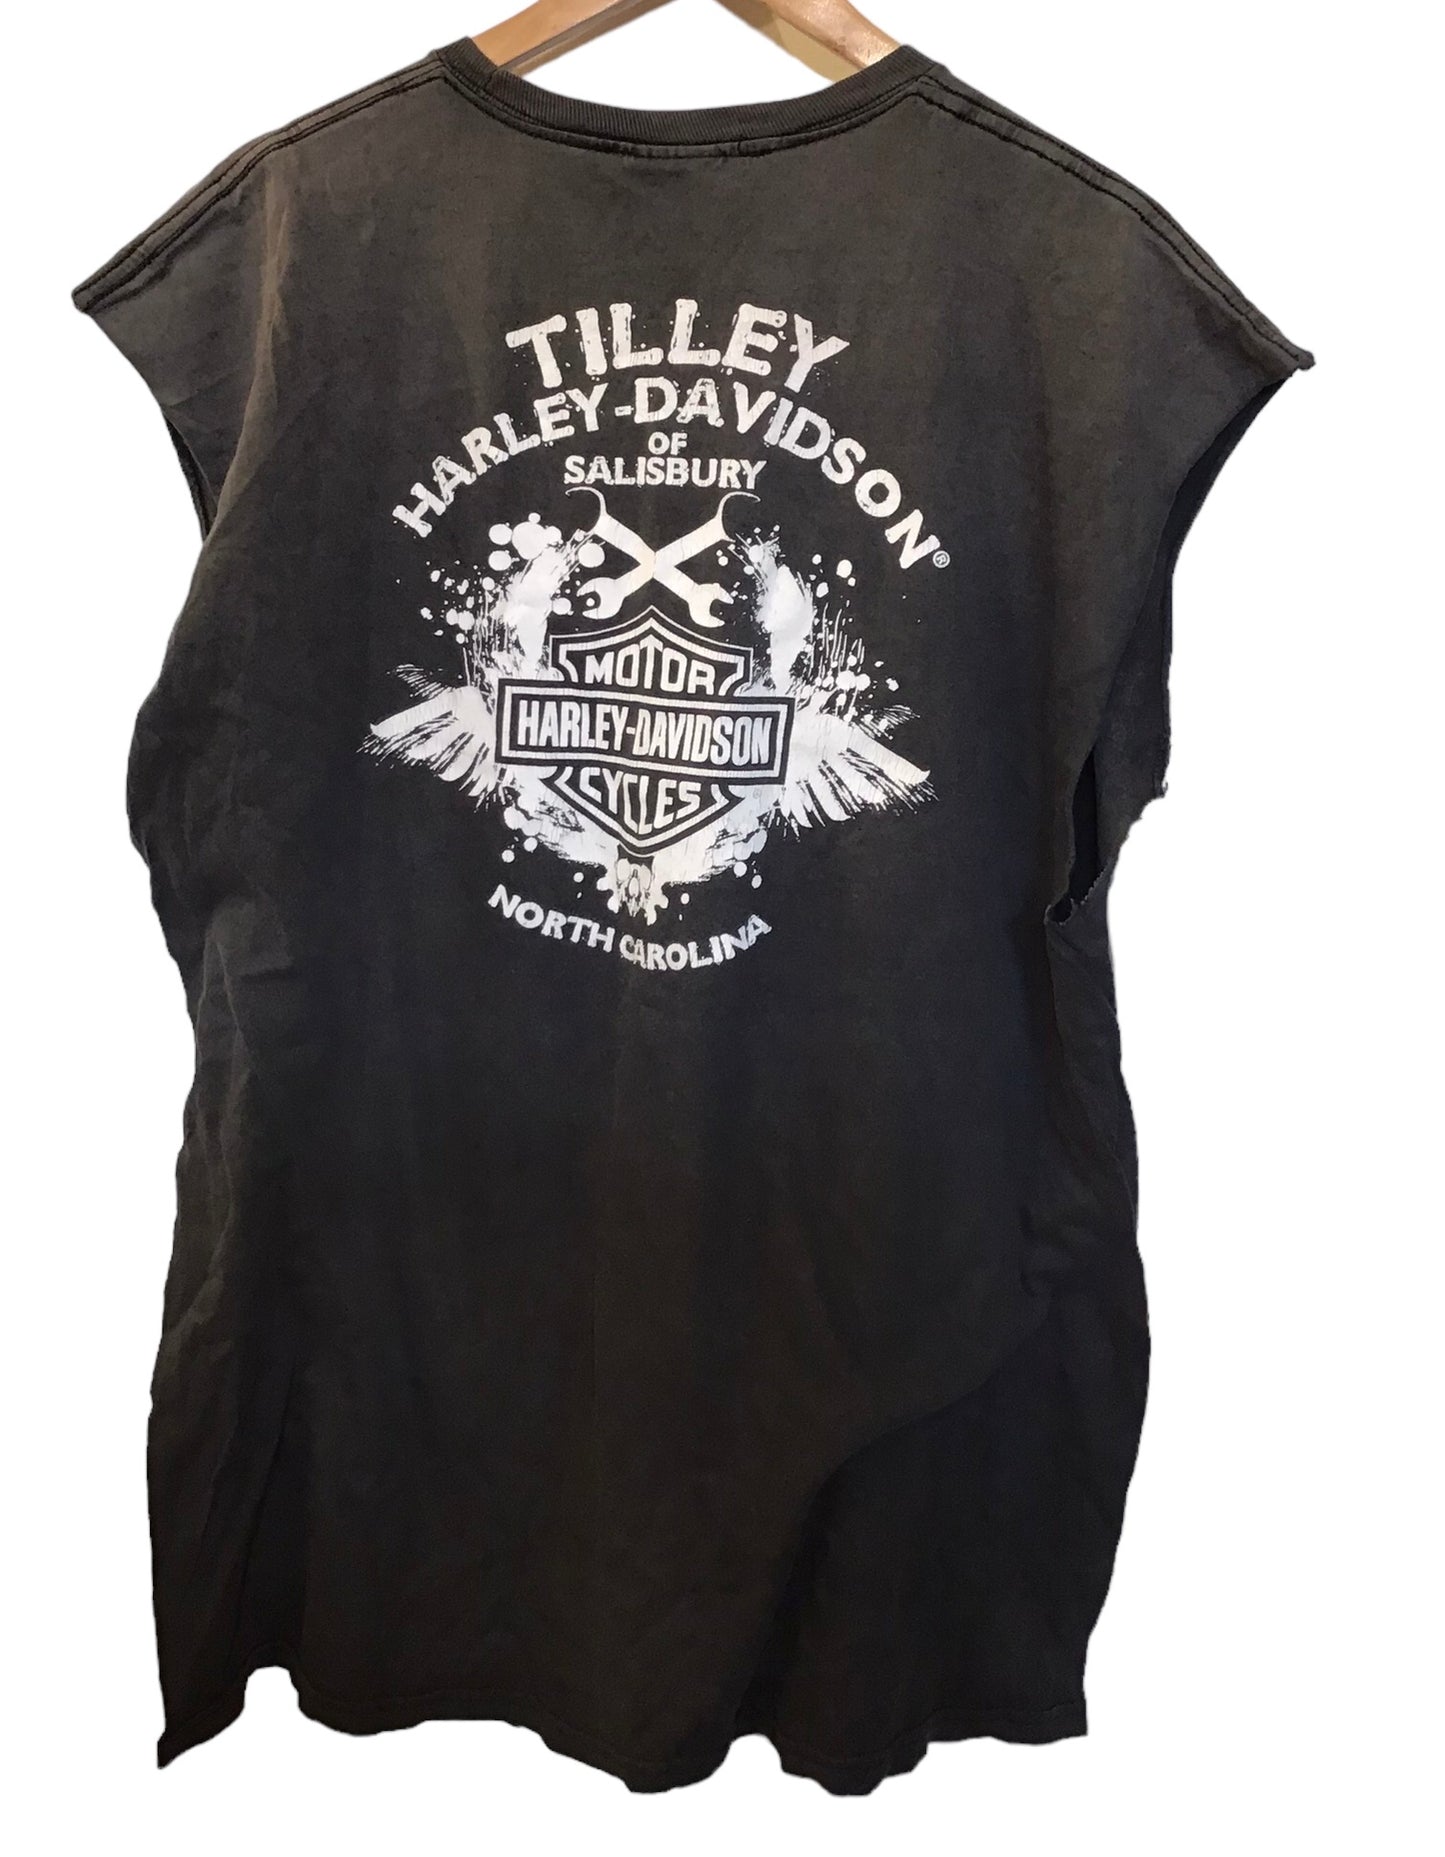 Harley Davidson sleeveless T-shirt (size XXL)